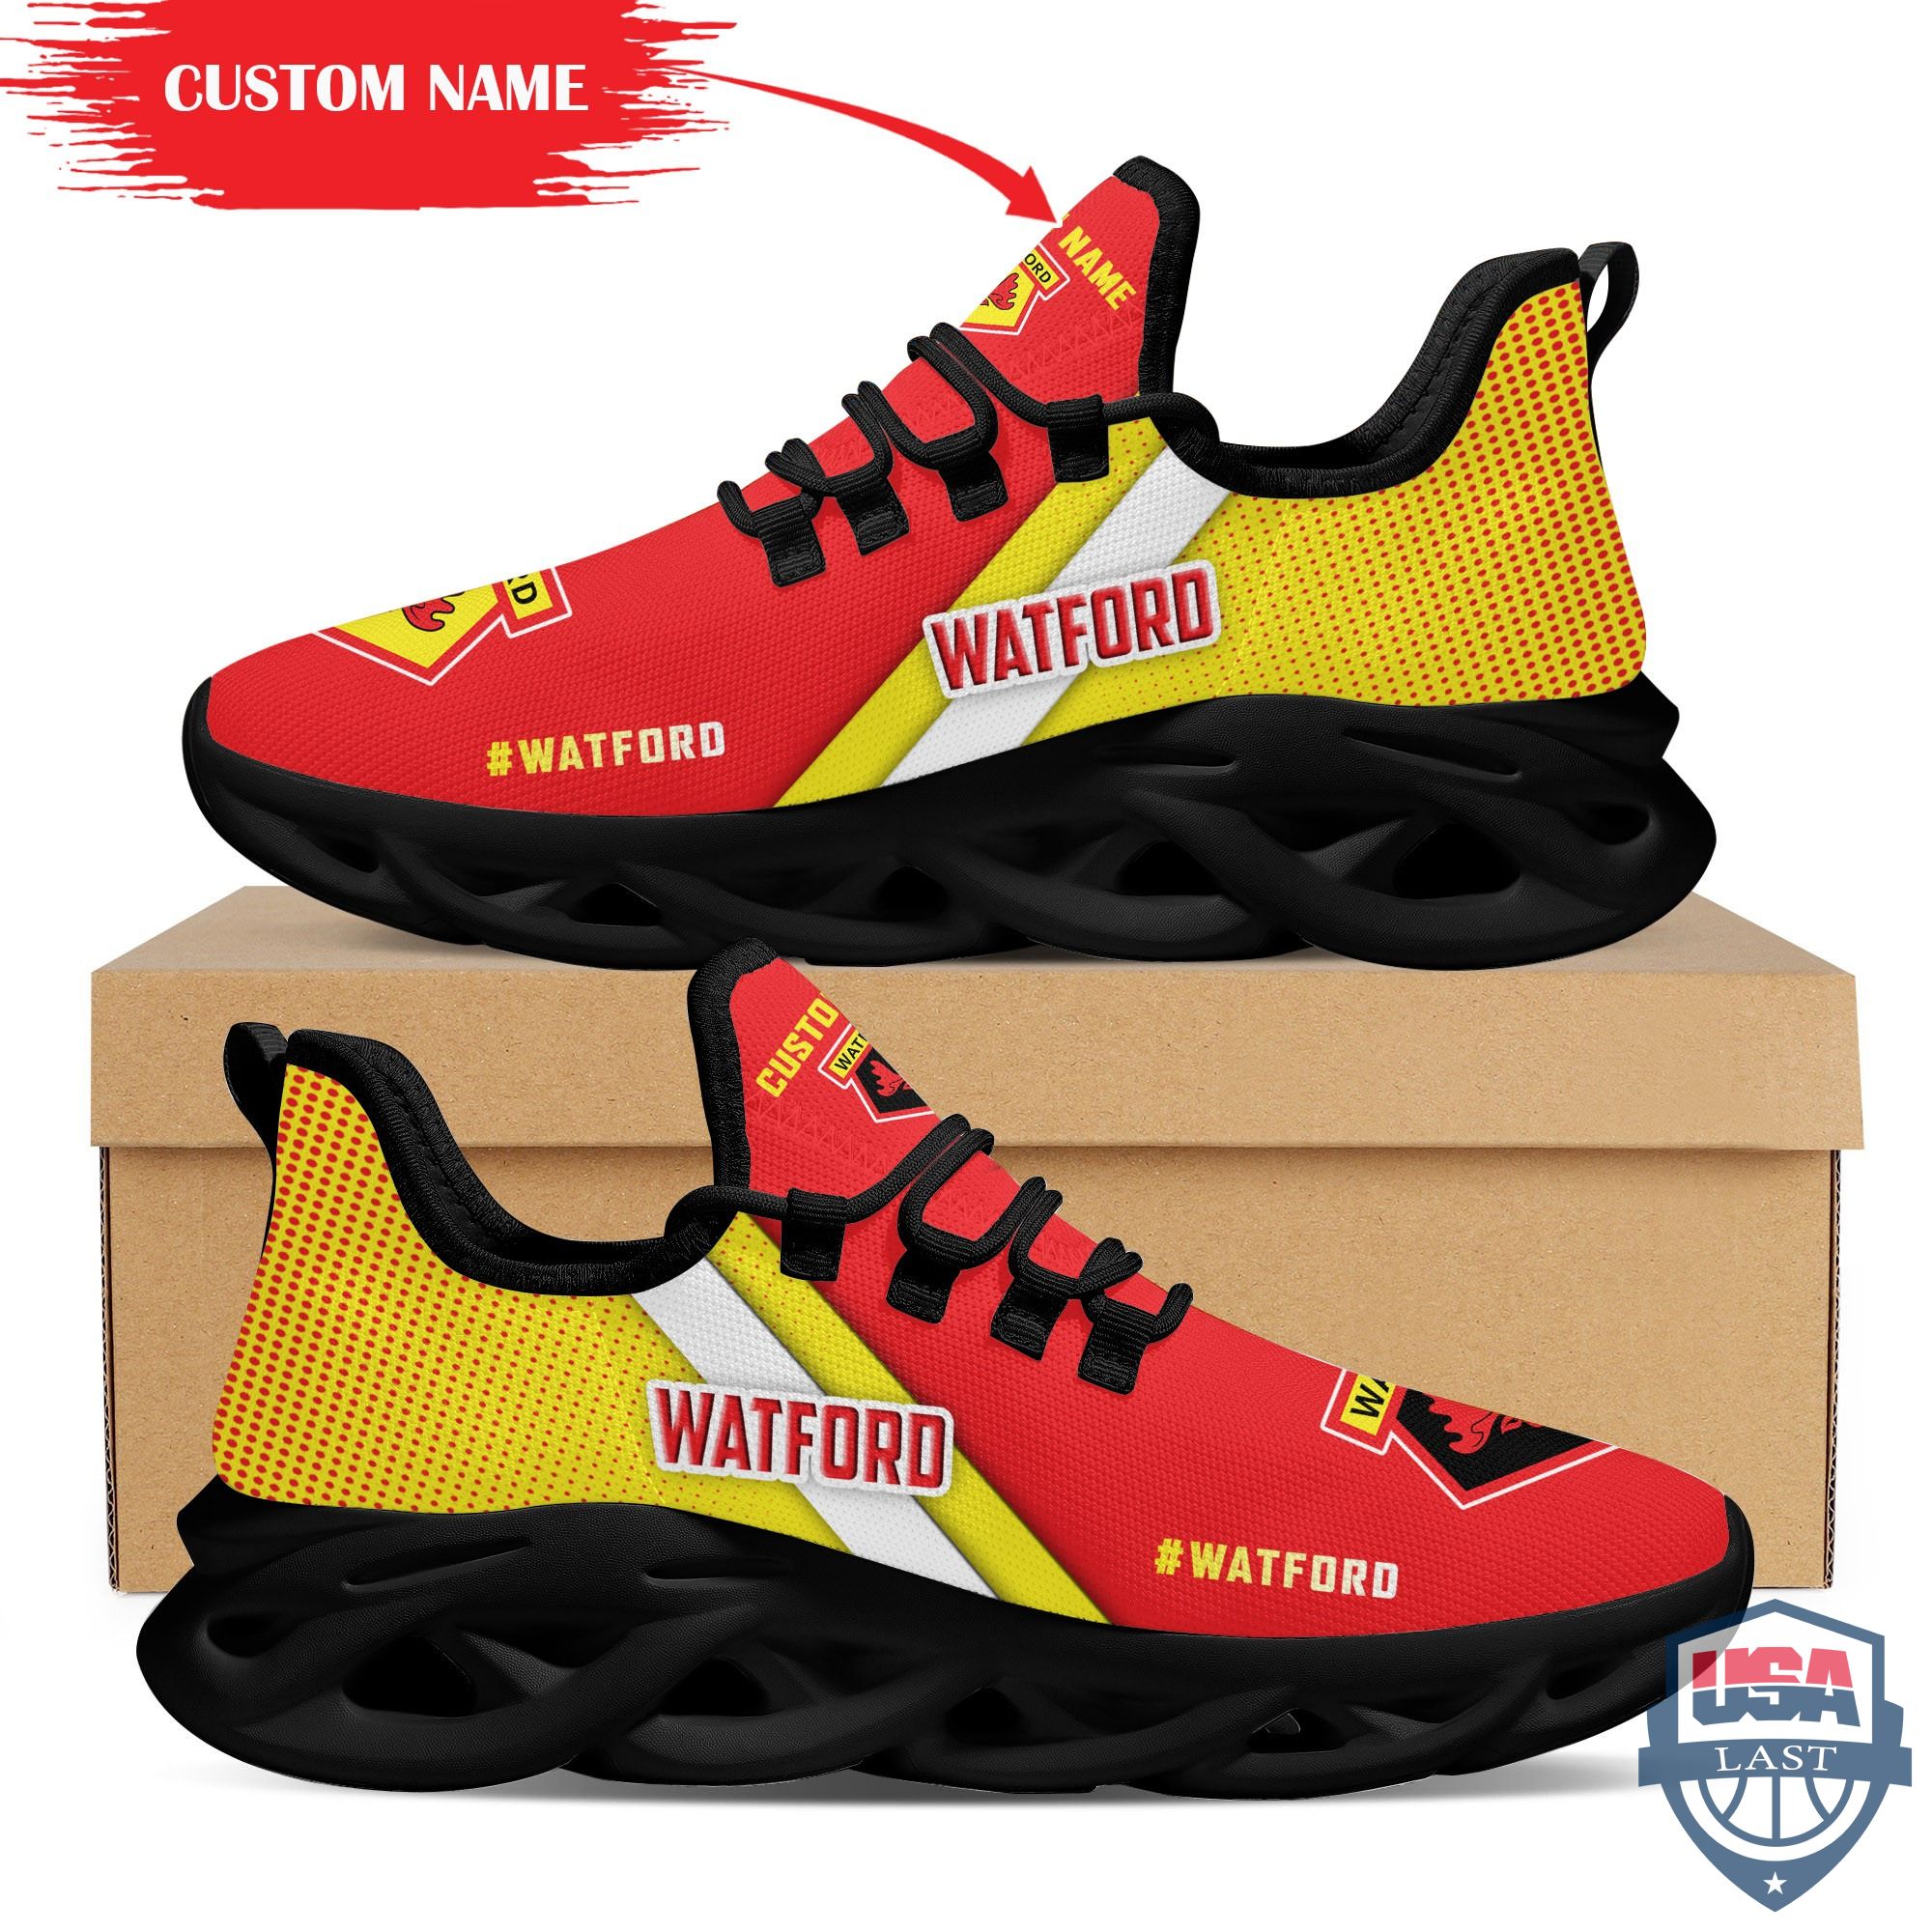 Watford Custom Name Max Soul Shoes